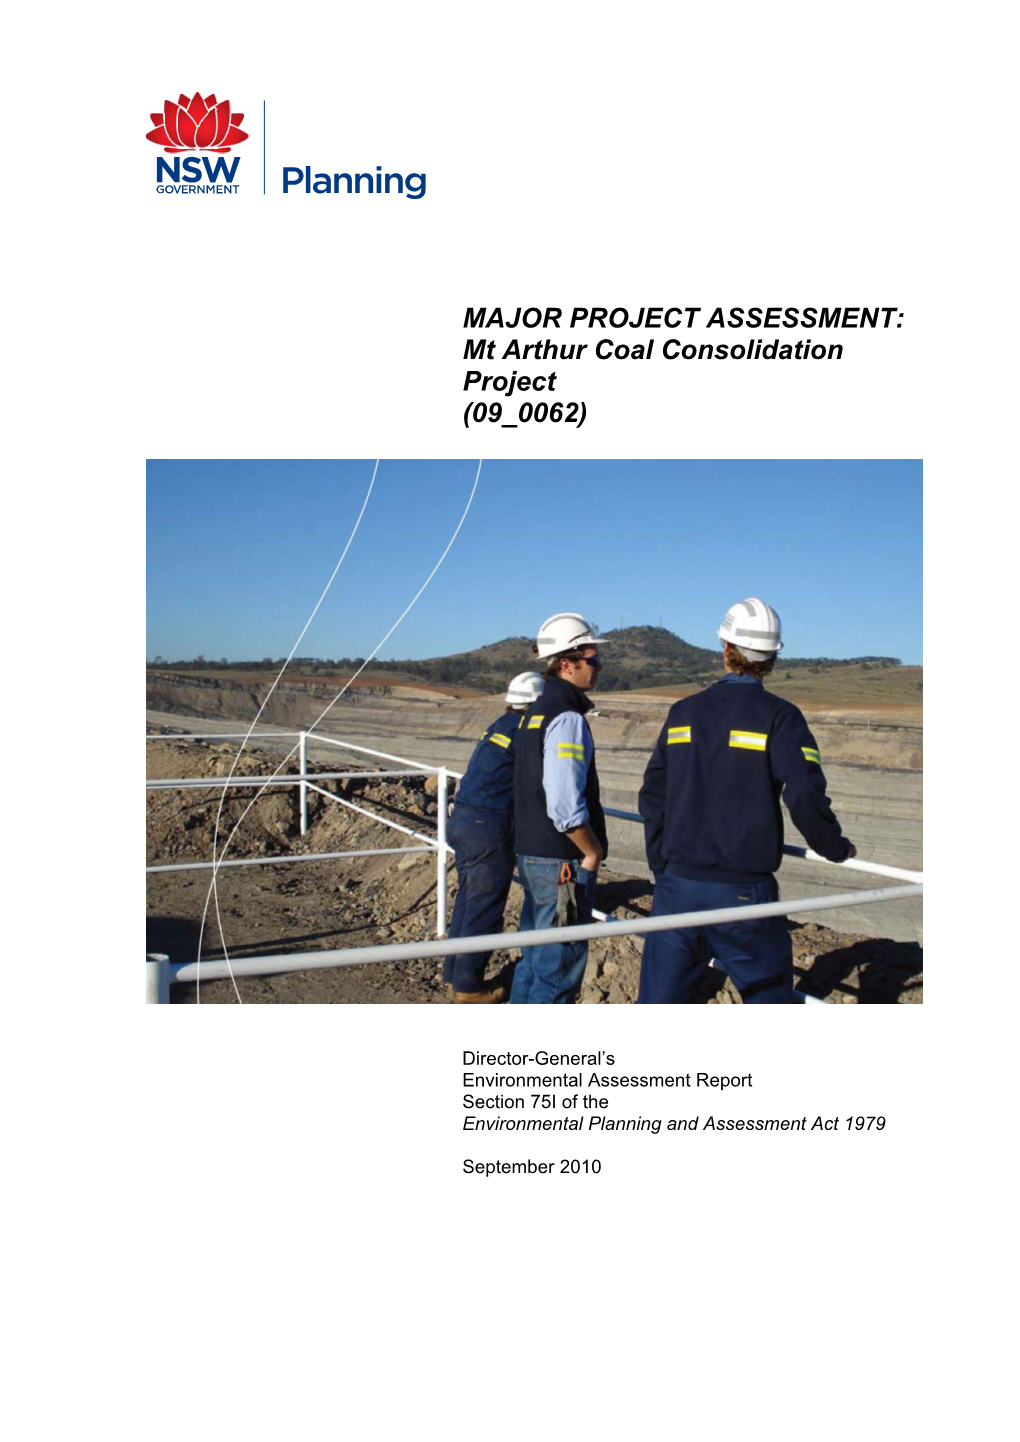 MAJOR PROJECT ASSESSMENT: Mt Arthur Coal Consolidation Project (09 0062)